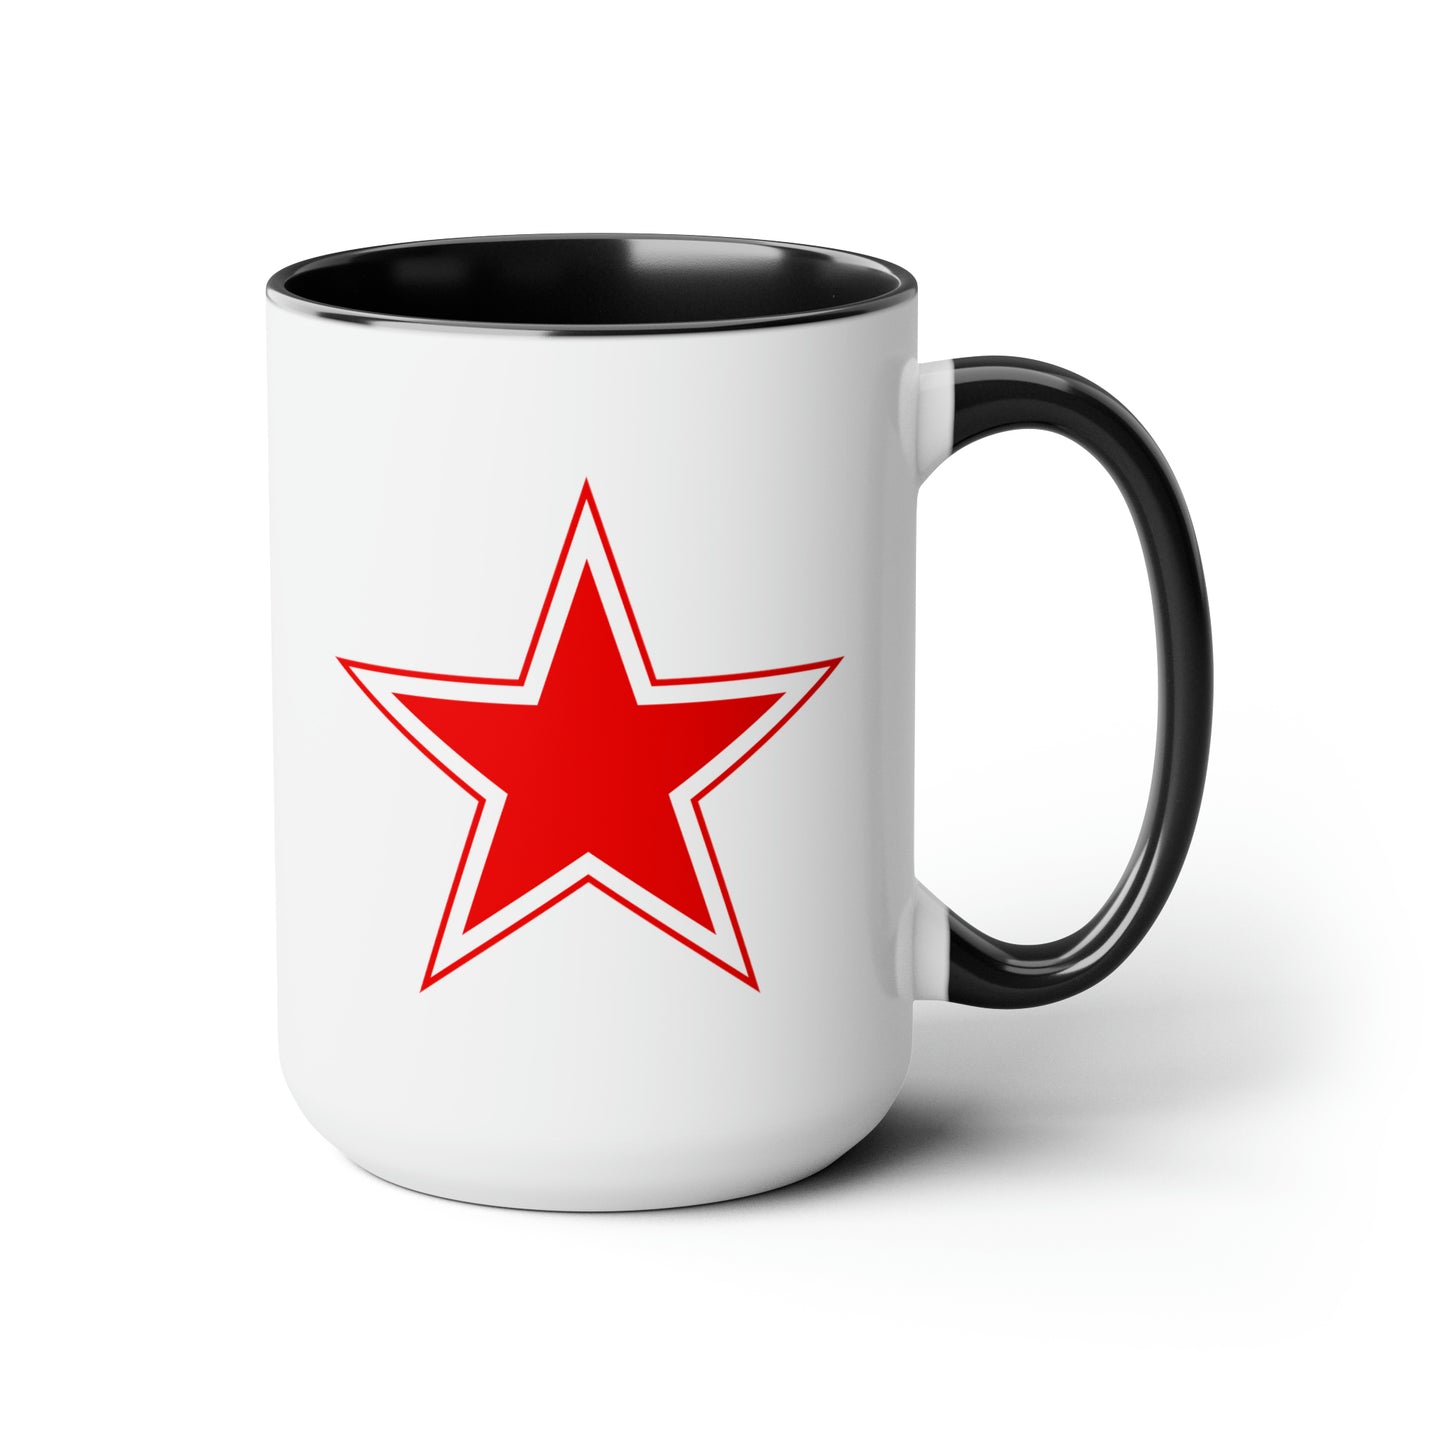 Soviet Union Air Force Roundel Coffee Mug - Double Sided Black Accent Ceramic 15oz - by TheGlassyLass.com